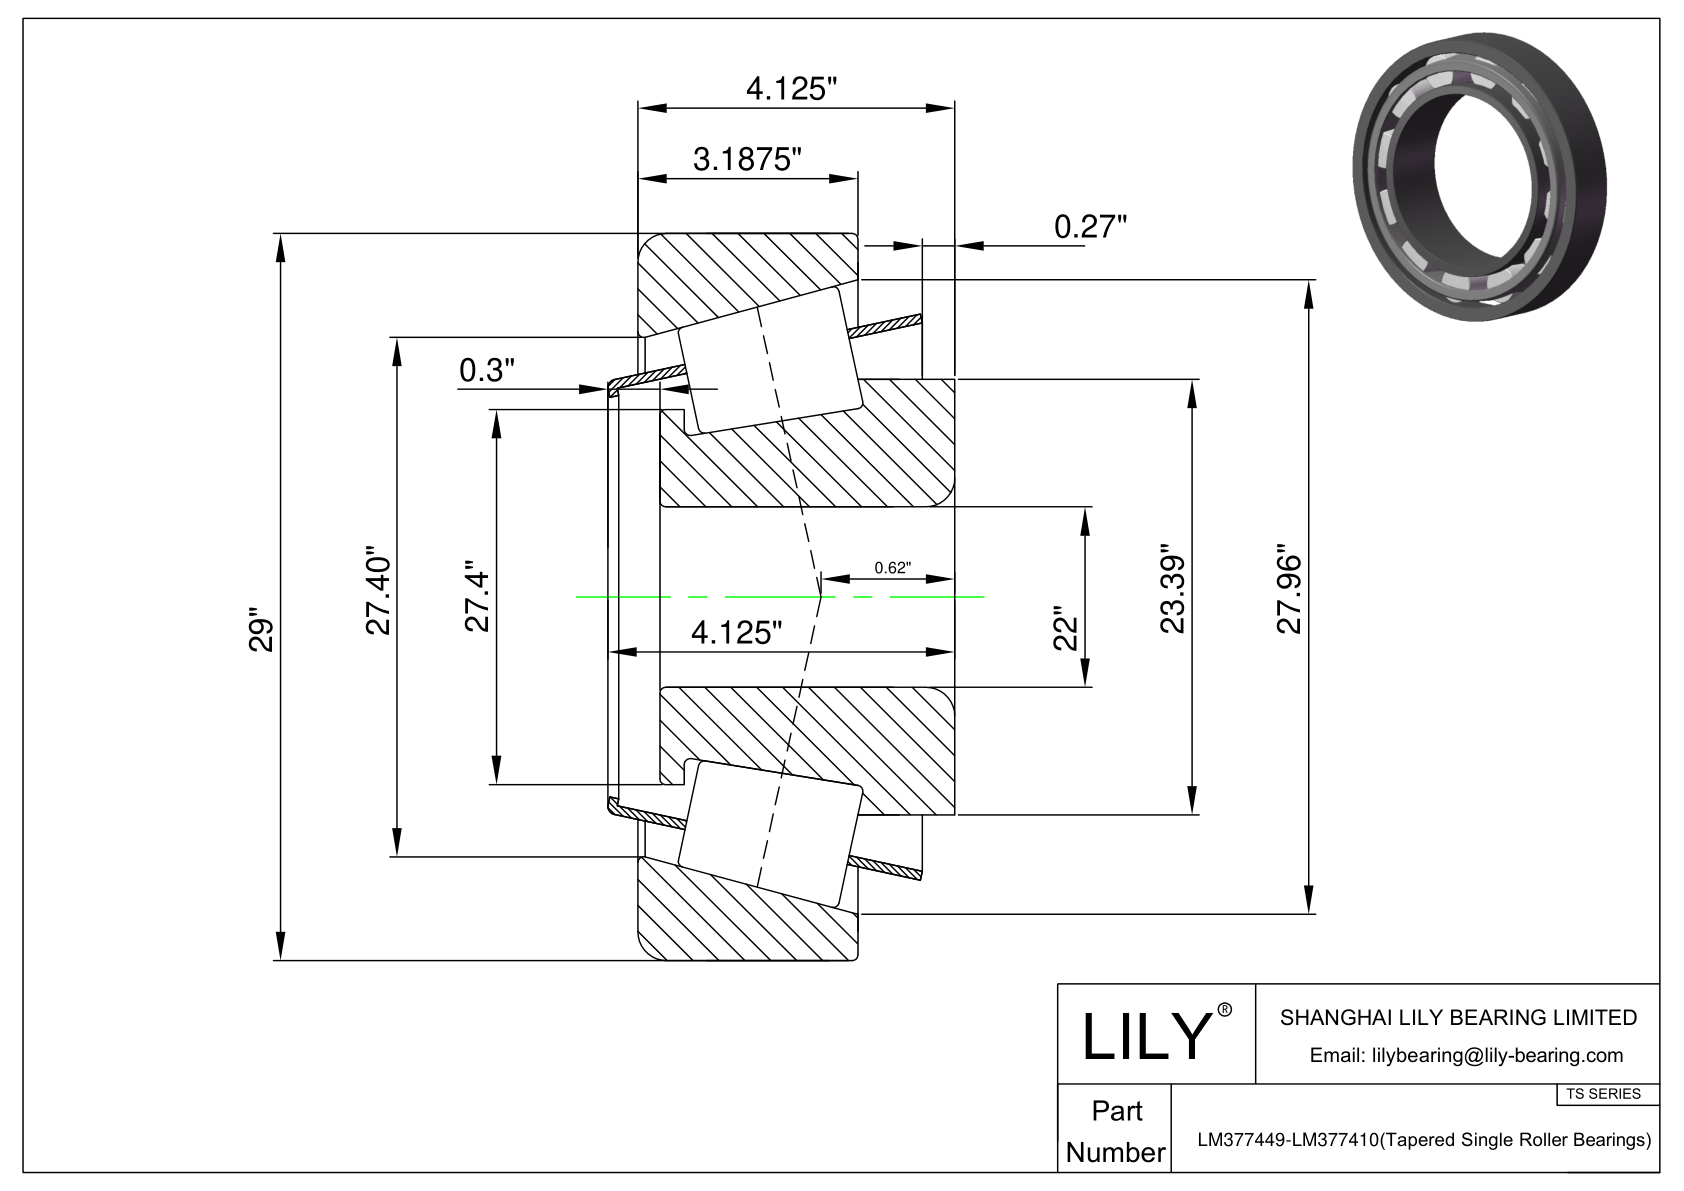 LM377449-LM377410 TS系列(圆锥单滚子轴承)(英制) CAD图形